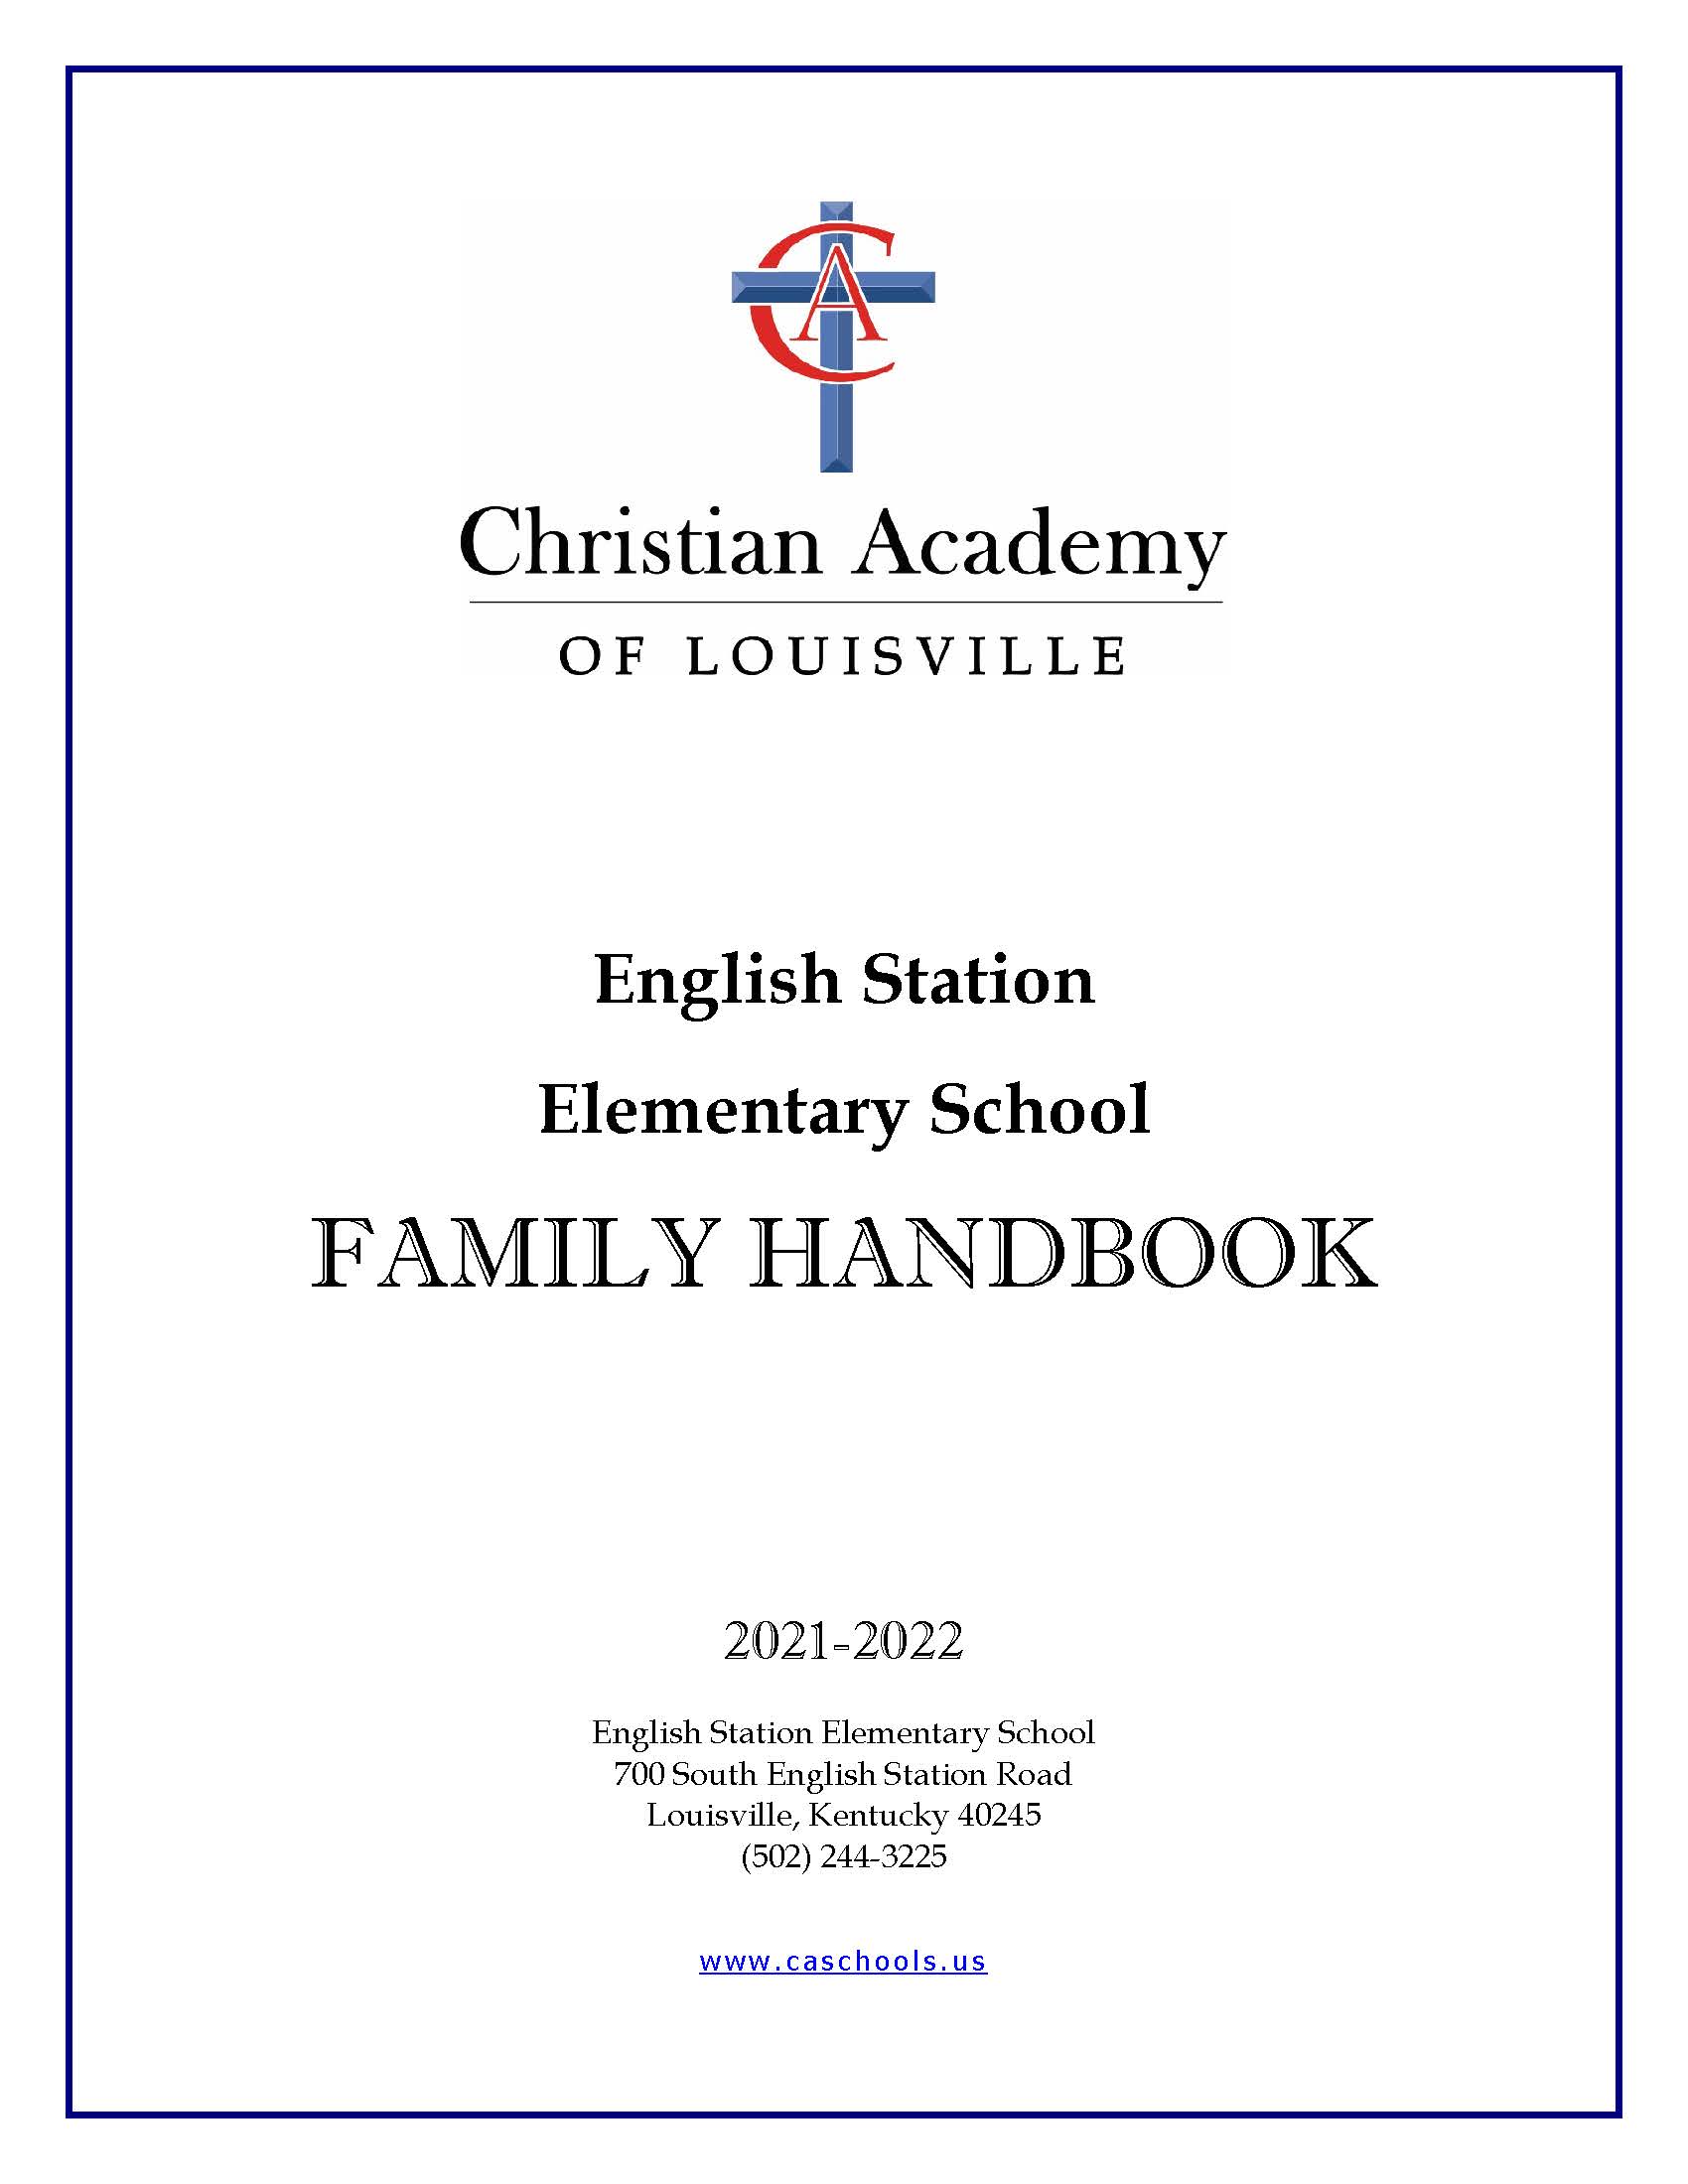 Christian Academy School System | Christian Academy of Louisville - English Station | 2021-2022 Family Handbook